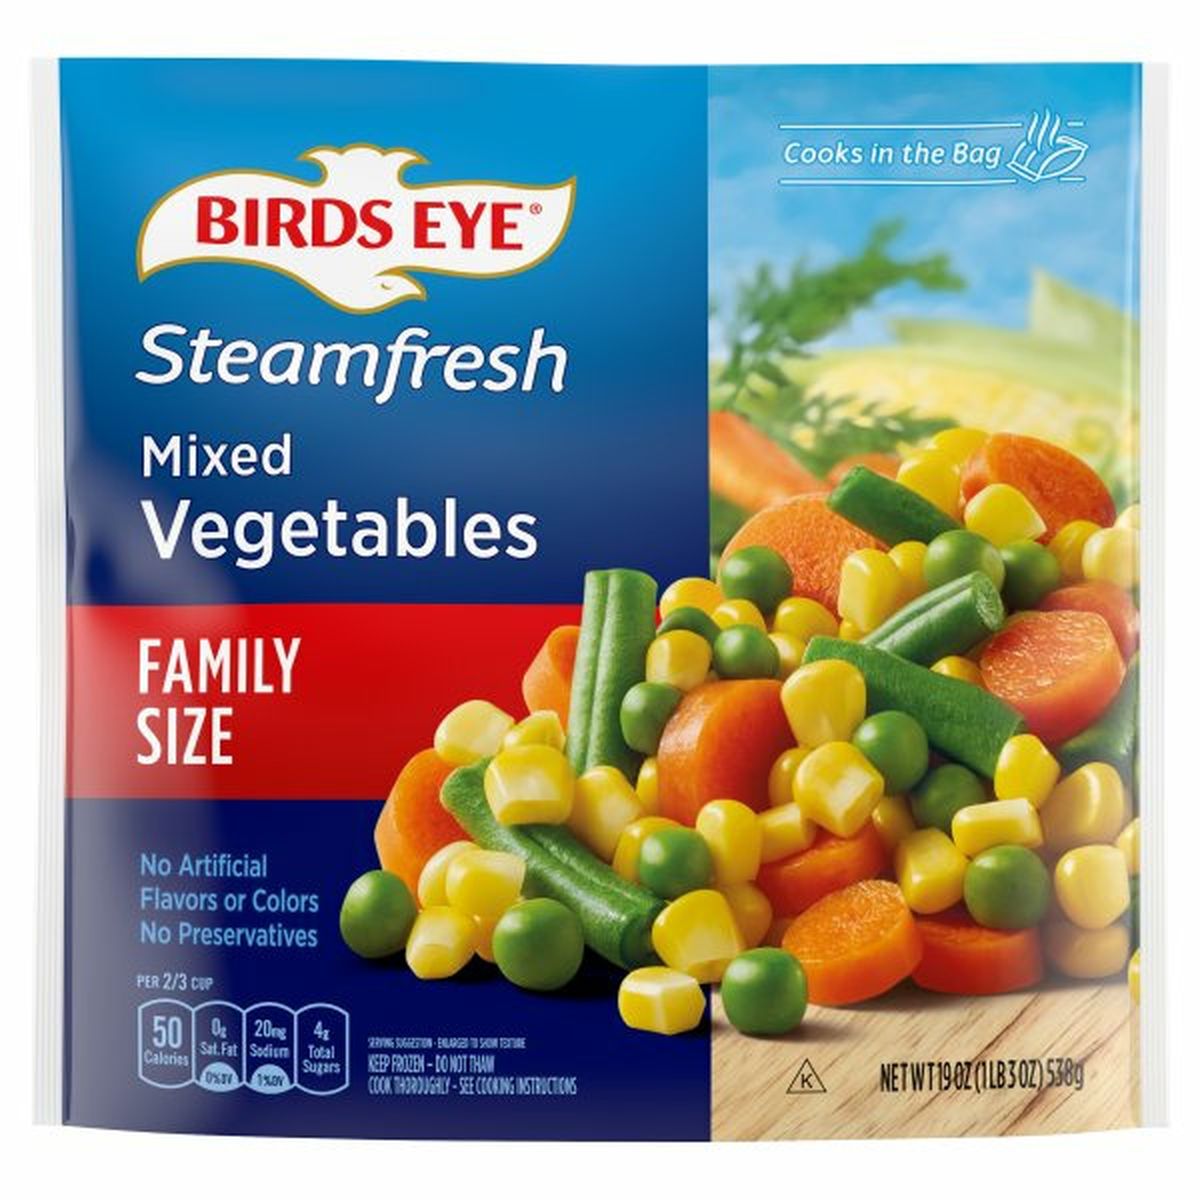 Calories in Birds Eye Steamfresh Mixed Vegetables, Family Size